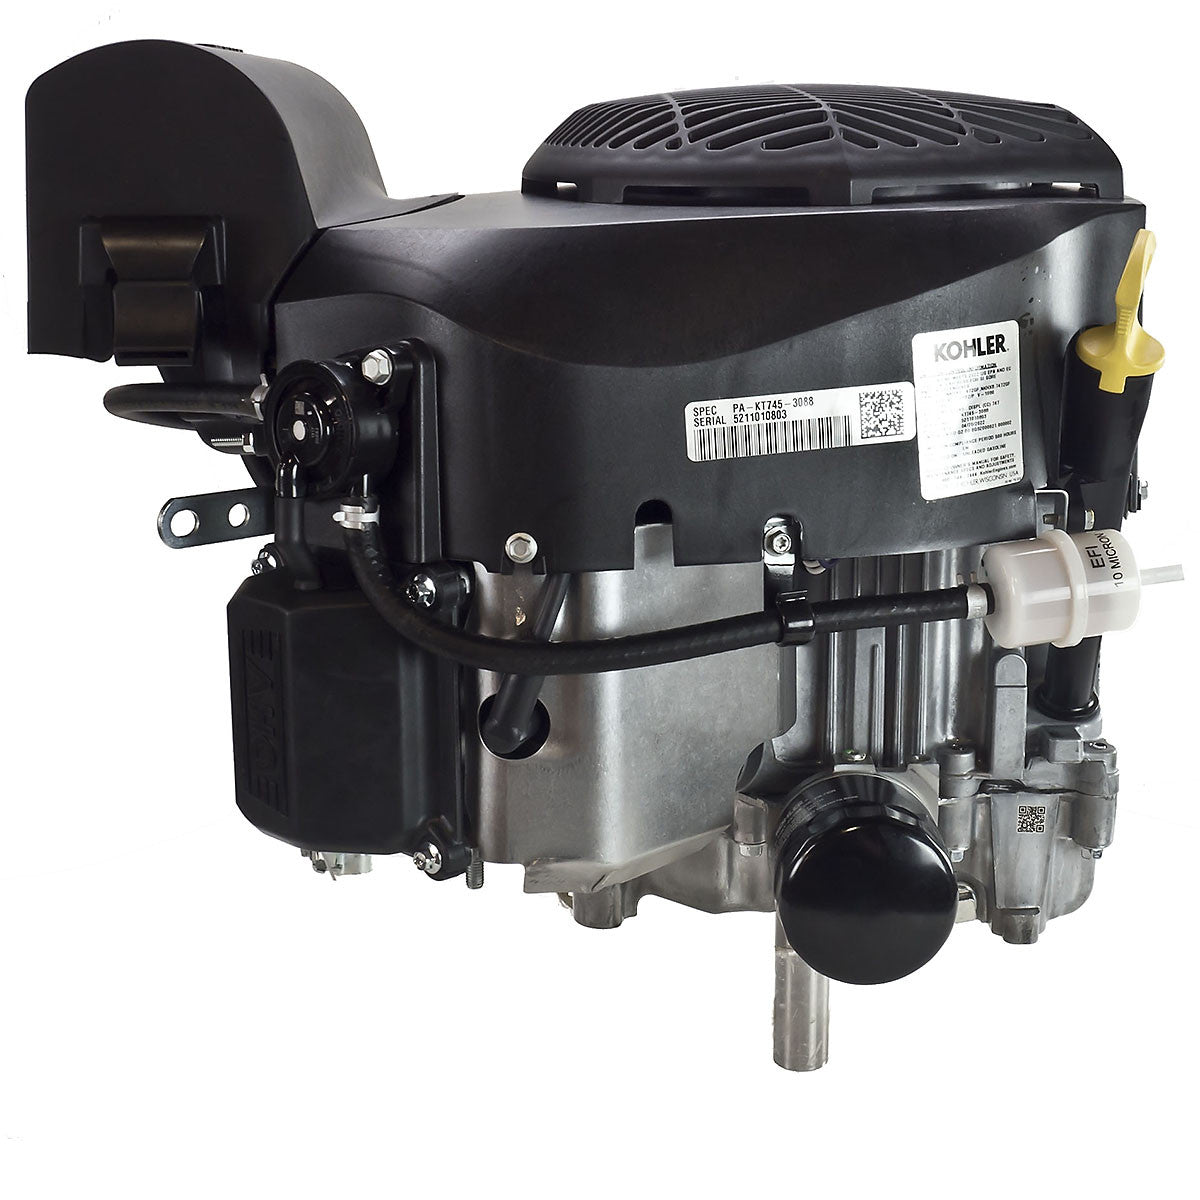 Kohler 7000 Series 26HP Replacement Engine #KT745-3088